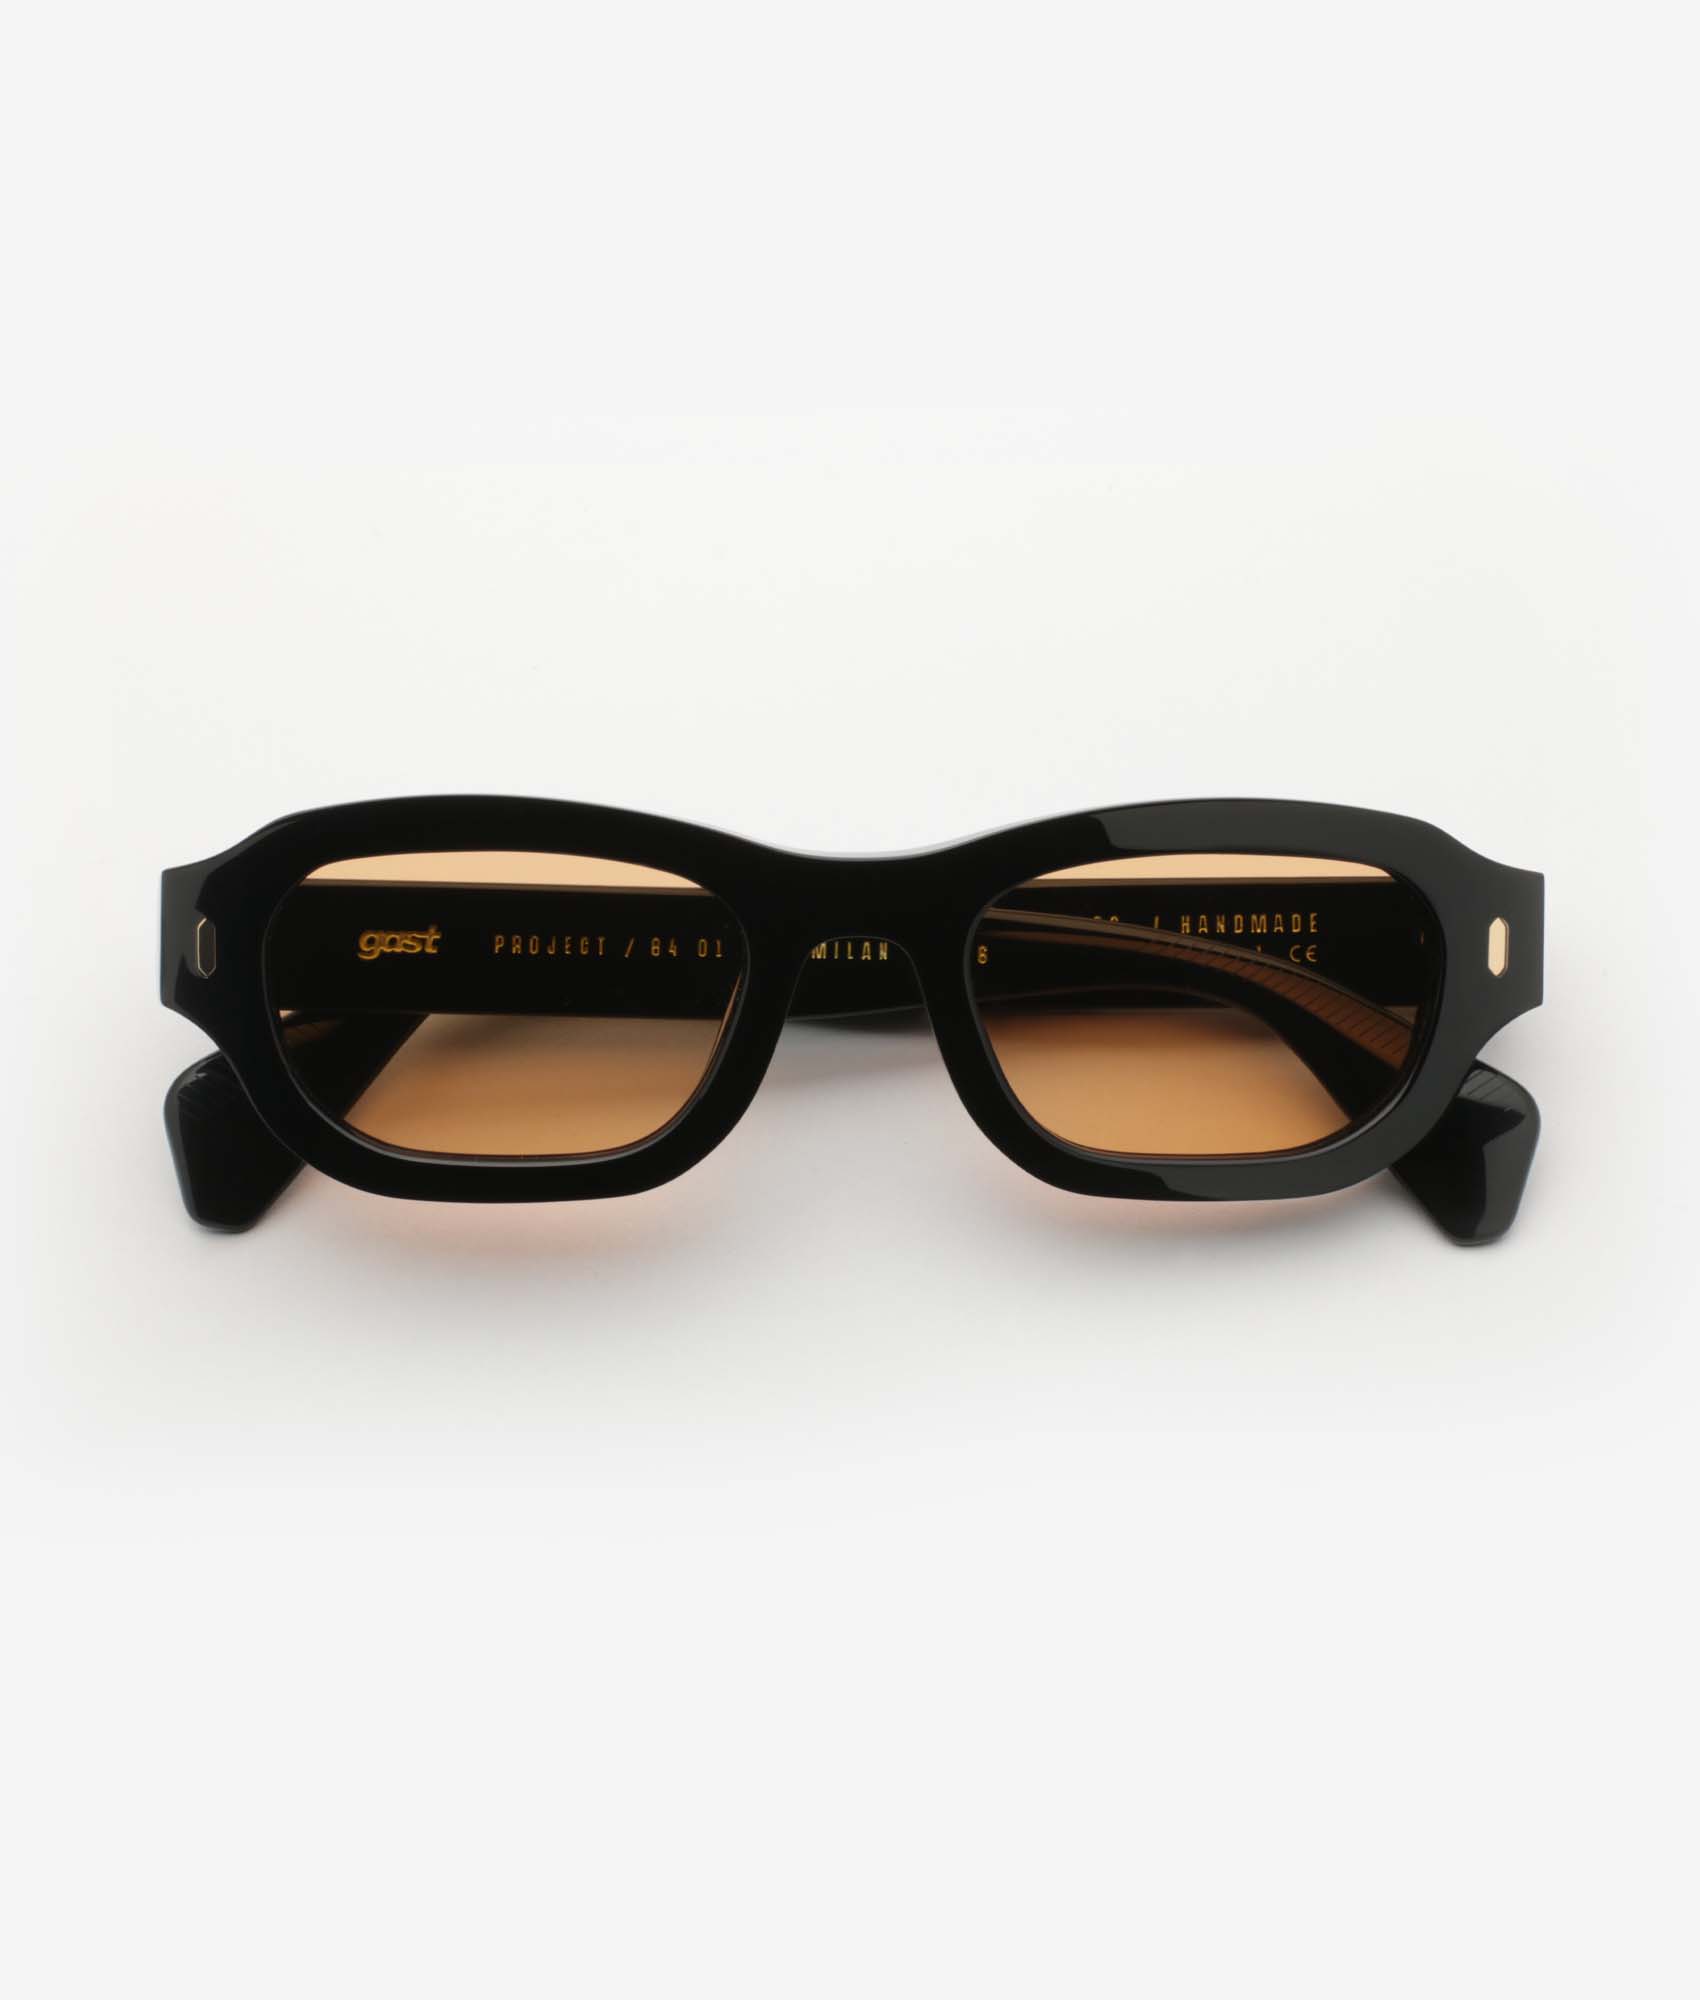 Sol Sandstone Gast Sunglasses